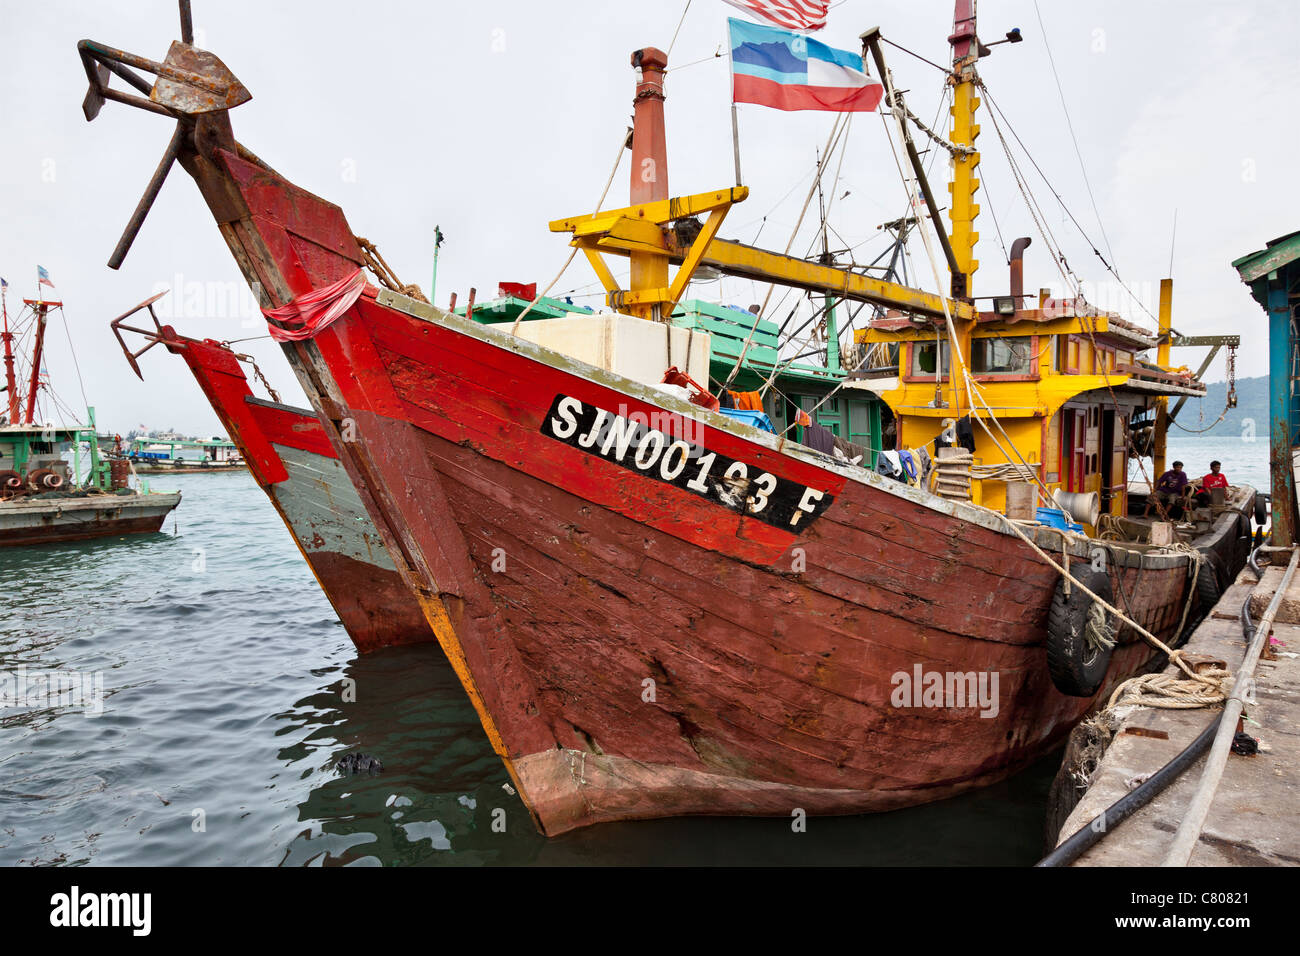 Angelboote/Fischerboote an Fisch Docks, Kota Kinabalu, Sabah, Malaysia Borneo Stockfoto